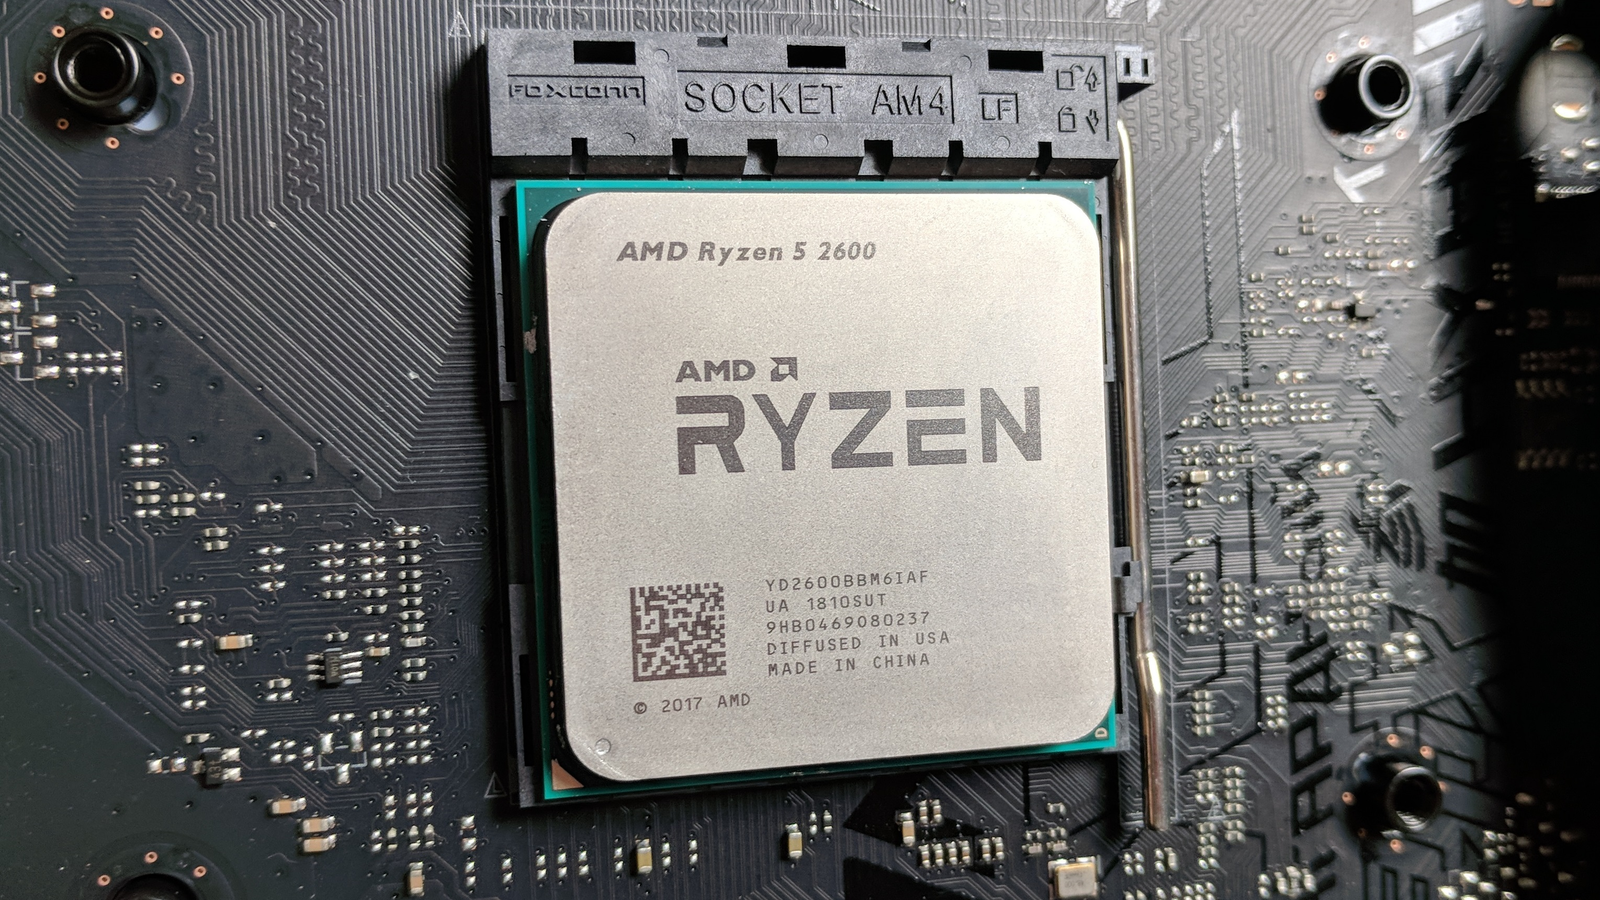 Ryzen x6. AMD Ryzen 5 2600. Процессор AMD Ryzen 5 2600x. Процессор AMD Ryzen 5 2600 am4. Ryzen 5 2500.